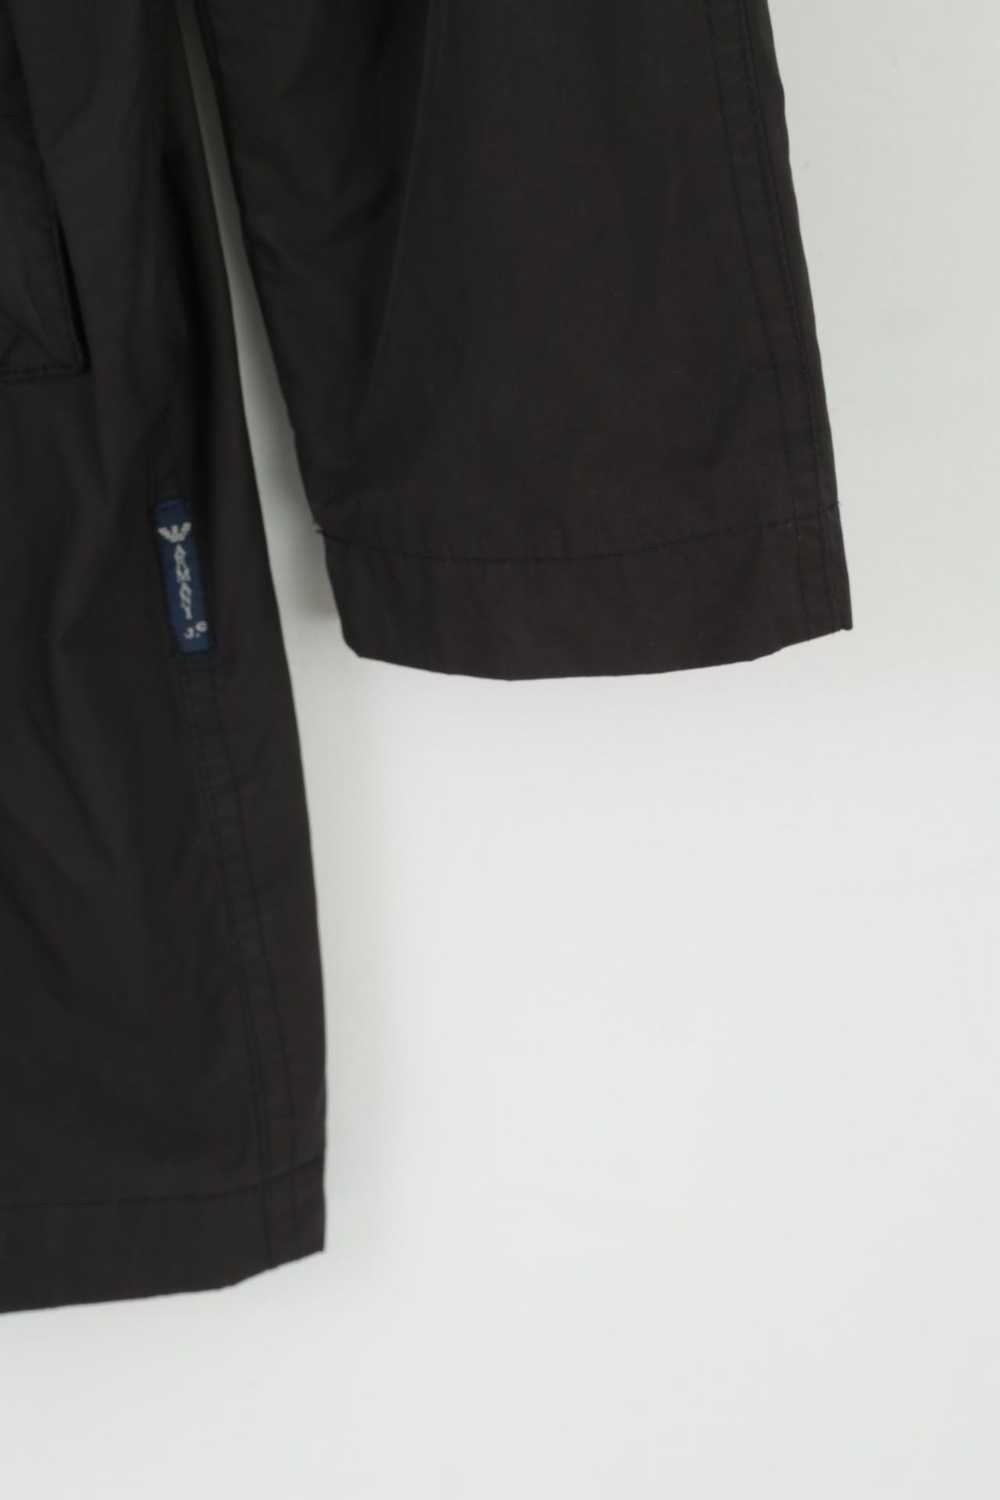 Armani Armani Jeans Women 6 S Jacket Black Zip Up… - image 6